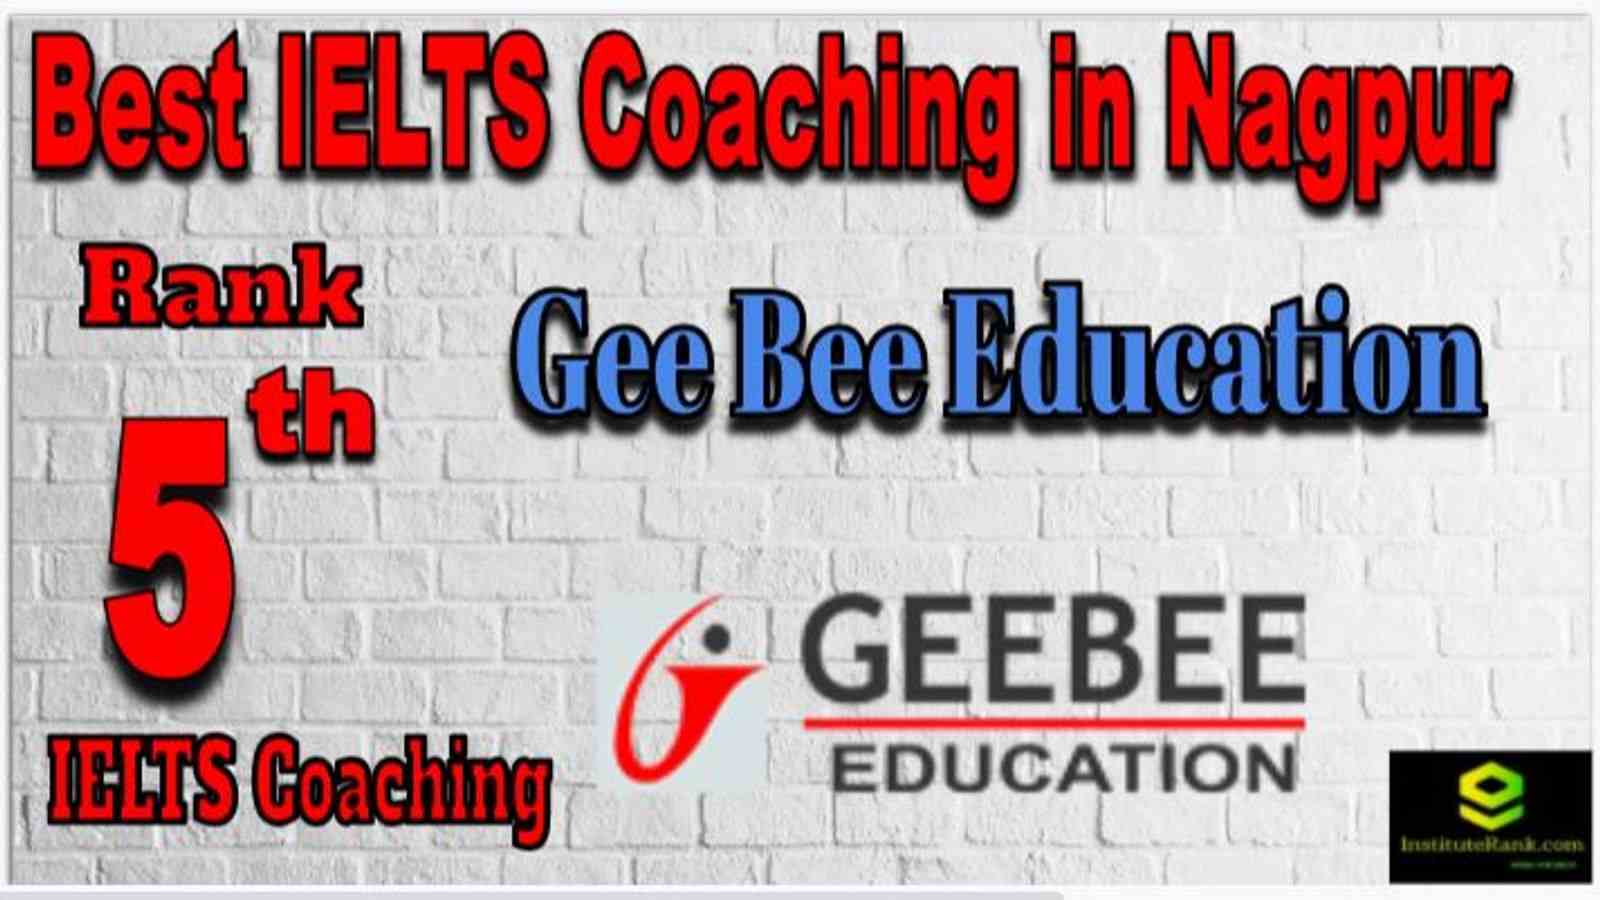 Rank 5 Best IELTS Coaching in Nagpur